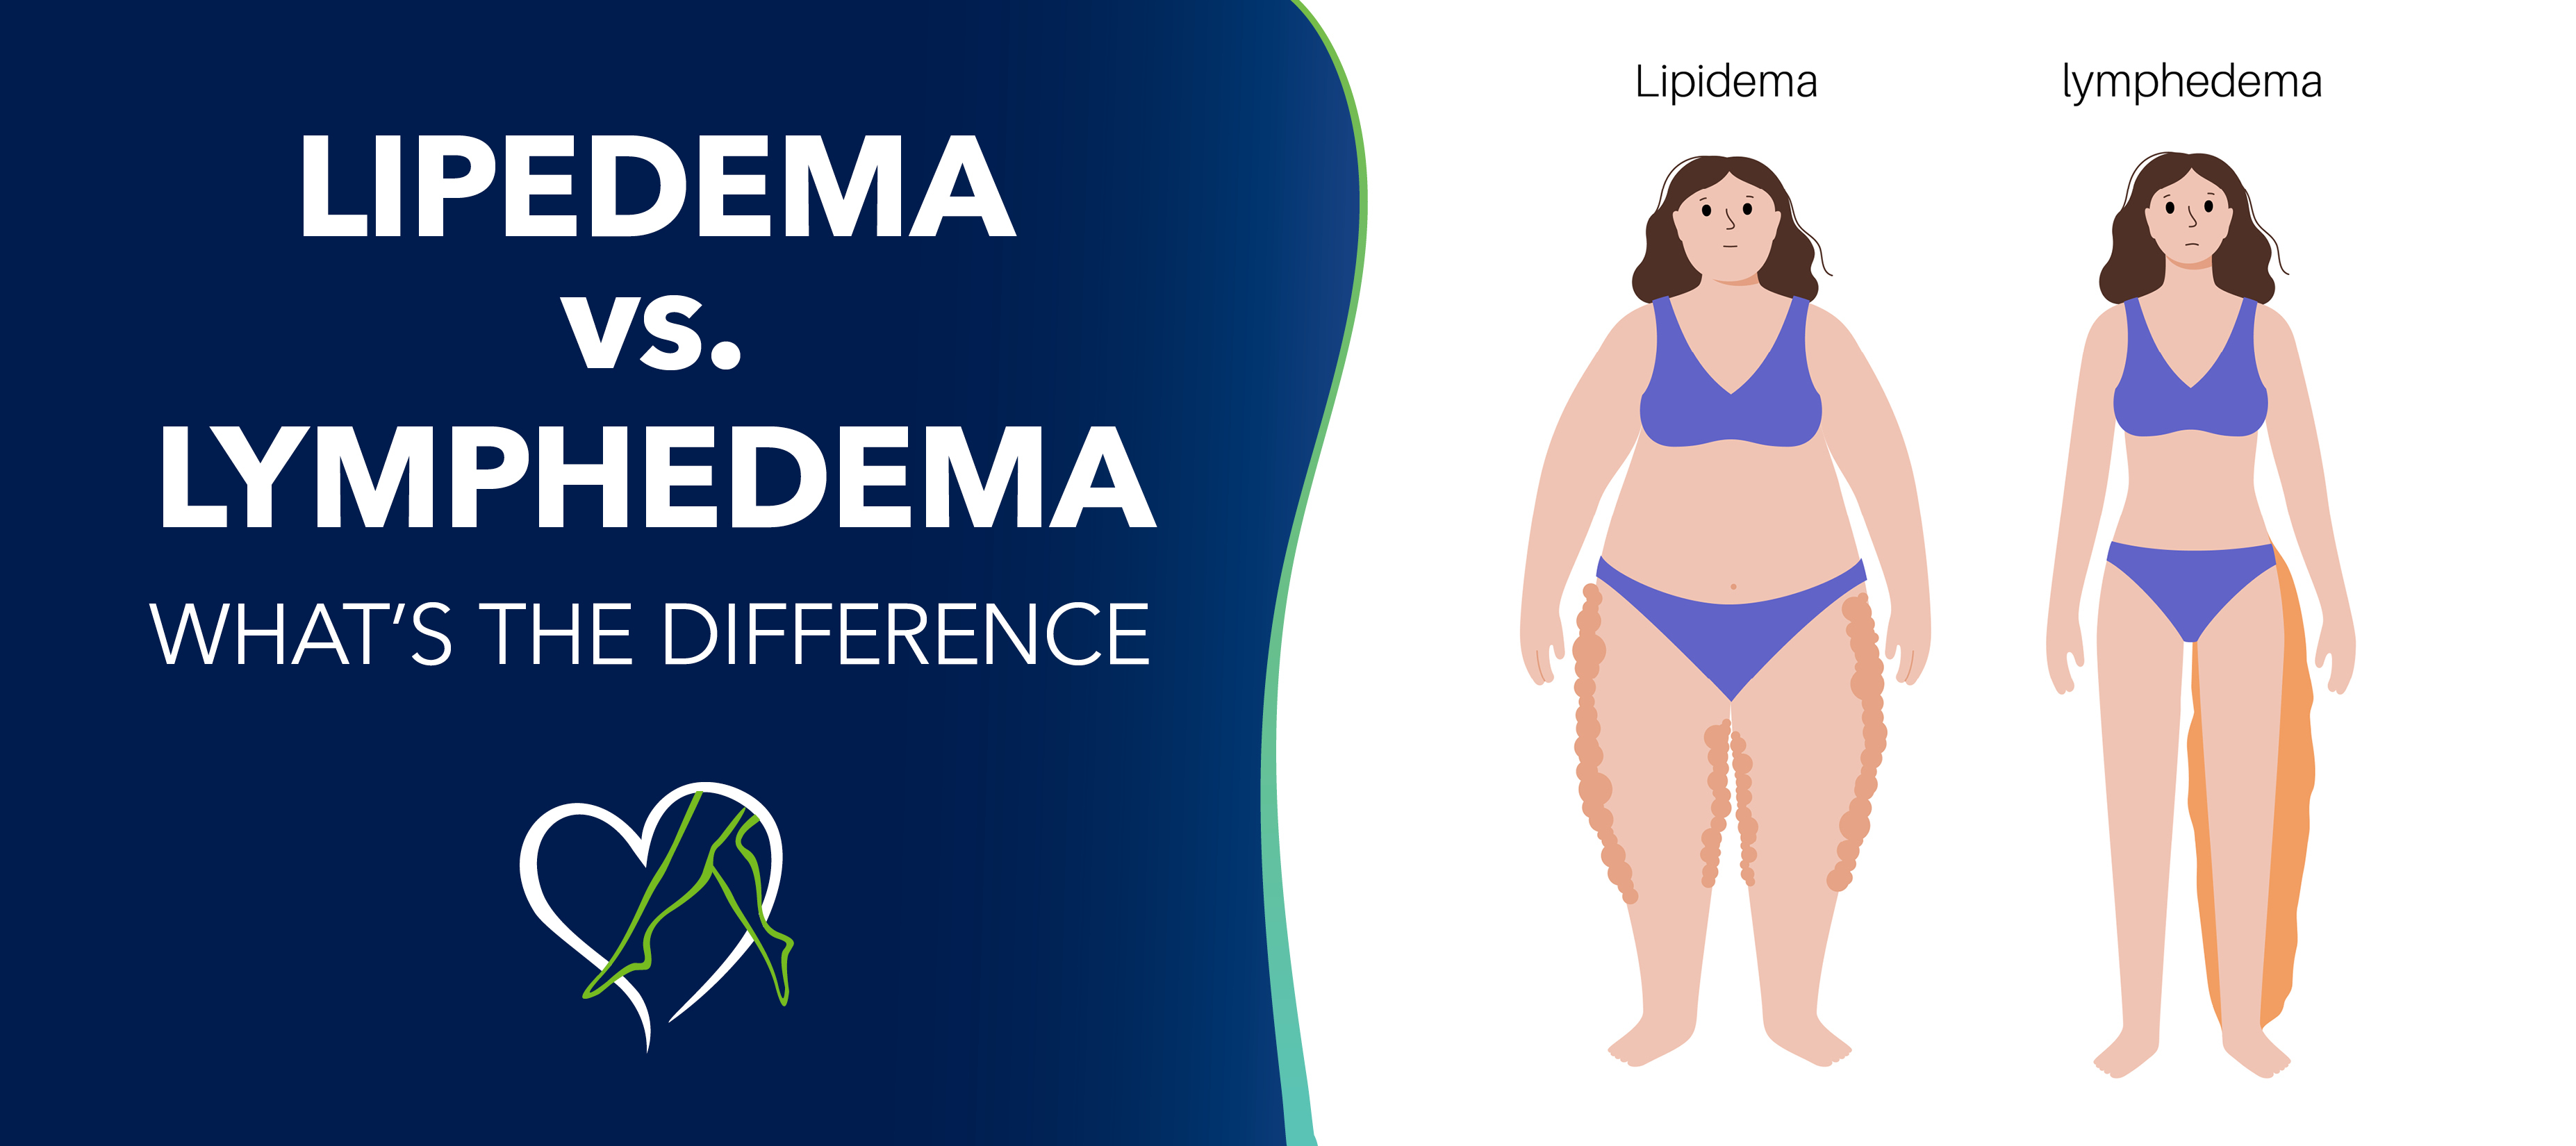 What Makes Lipedema Care So Expensive?